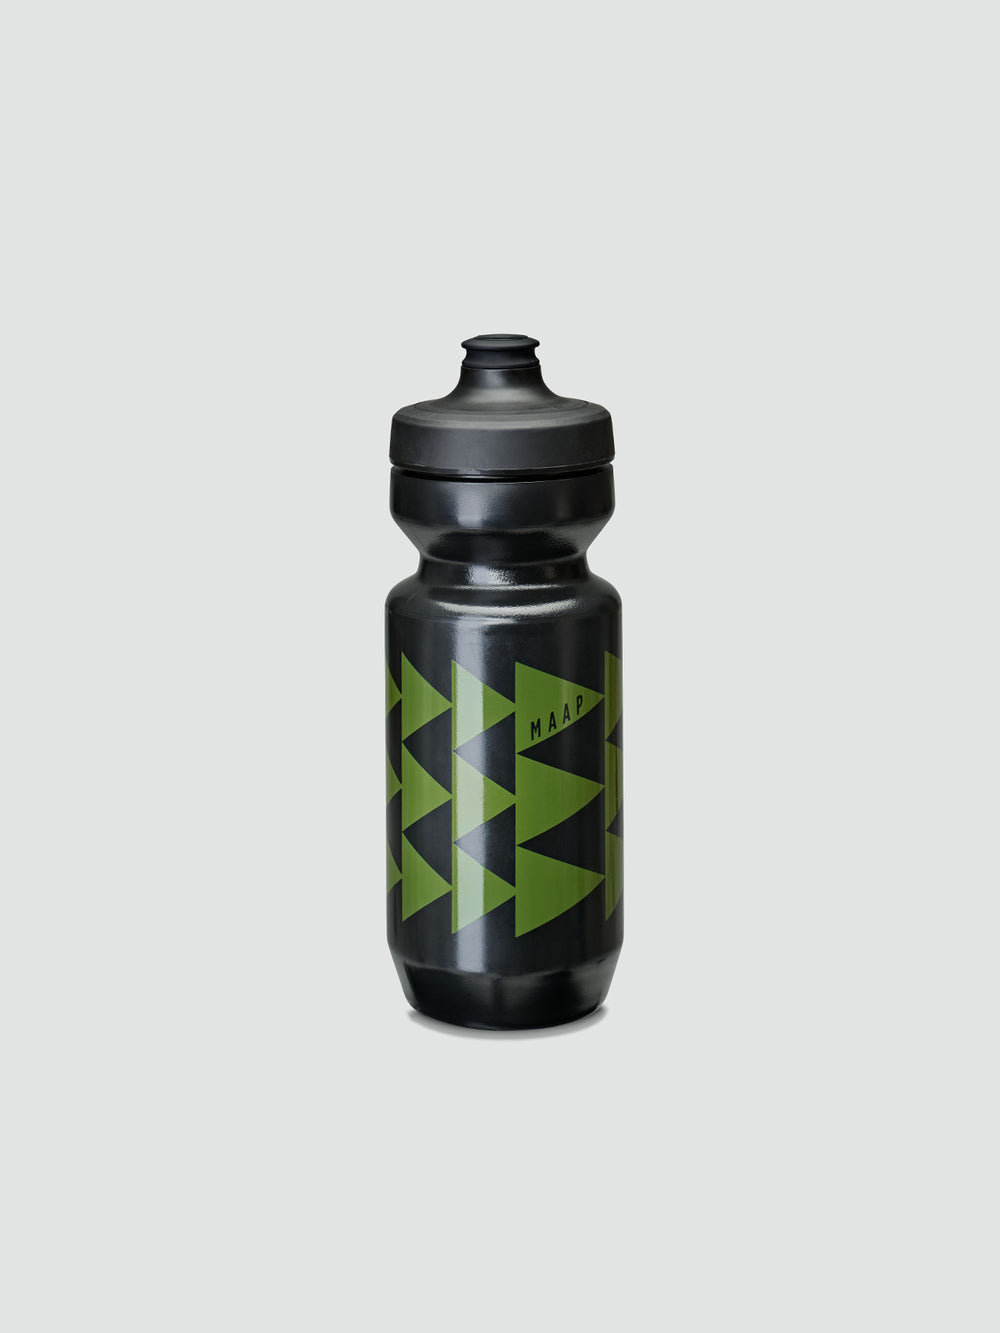 Product Image for Phase Bottle